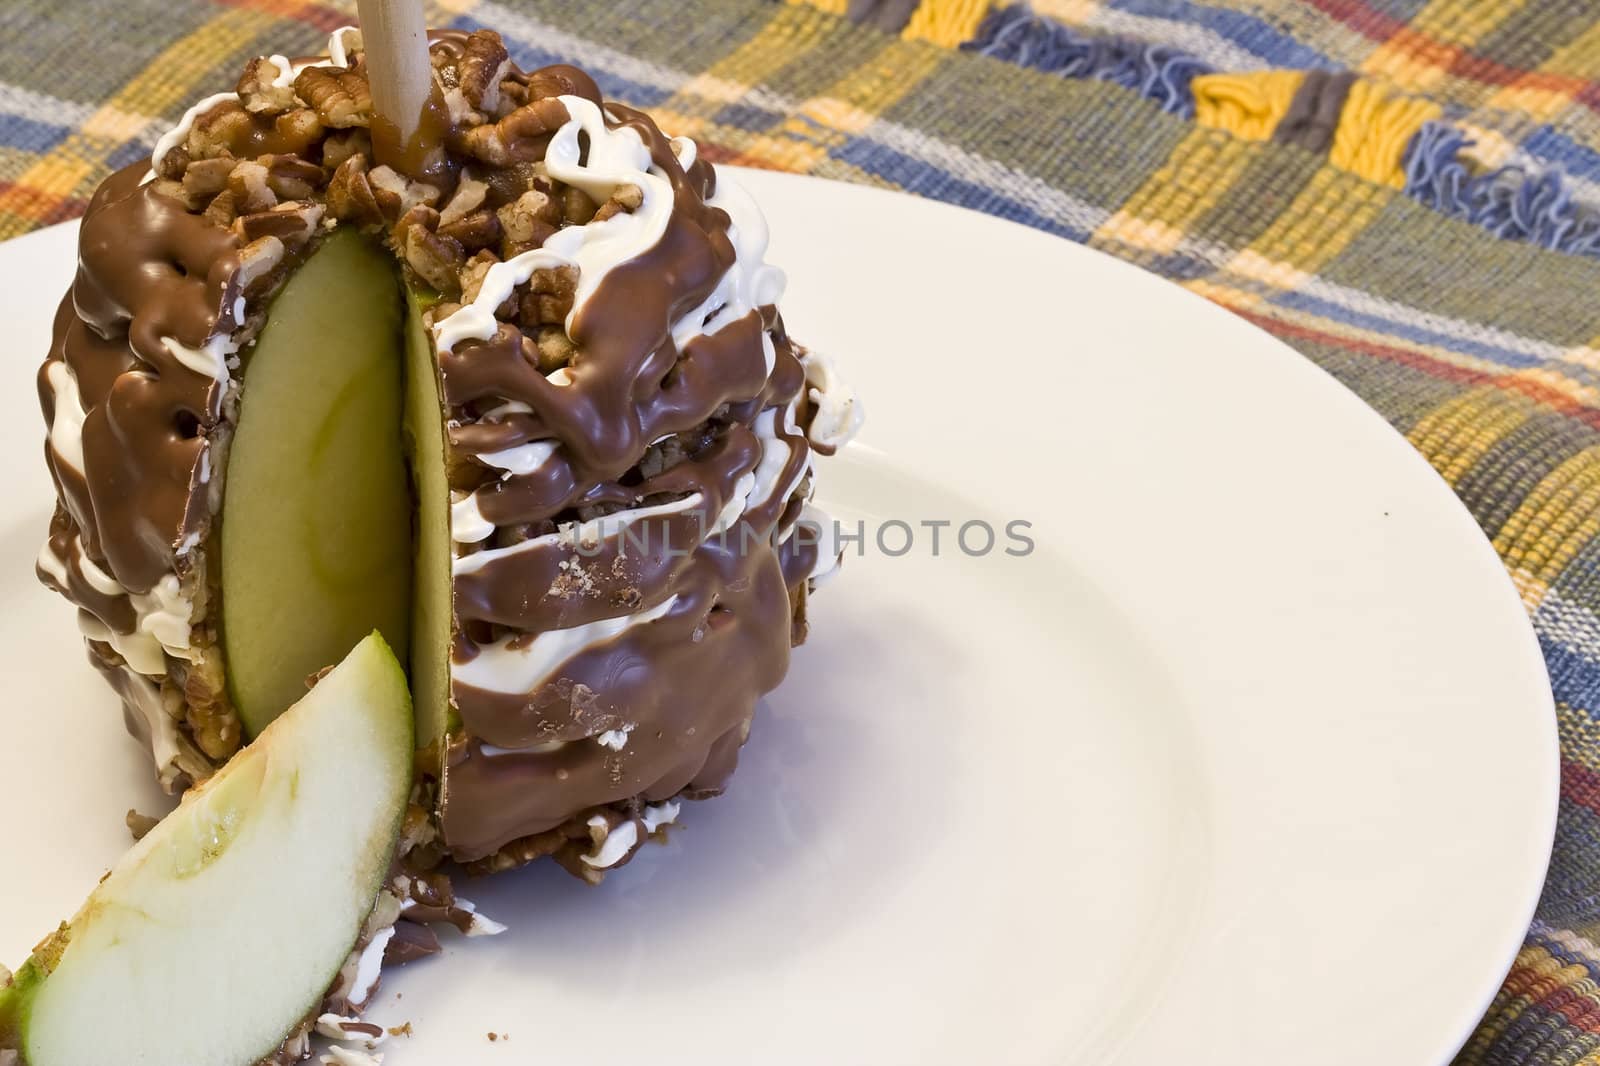 chocolate apple by snokid